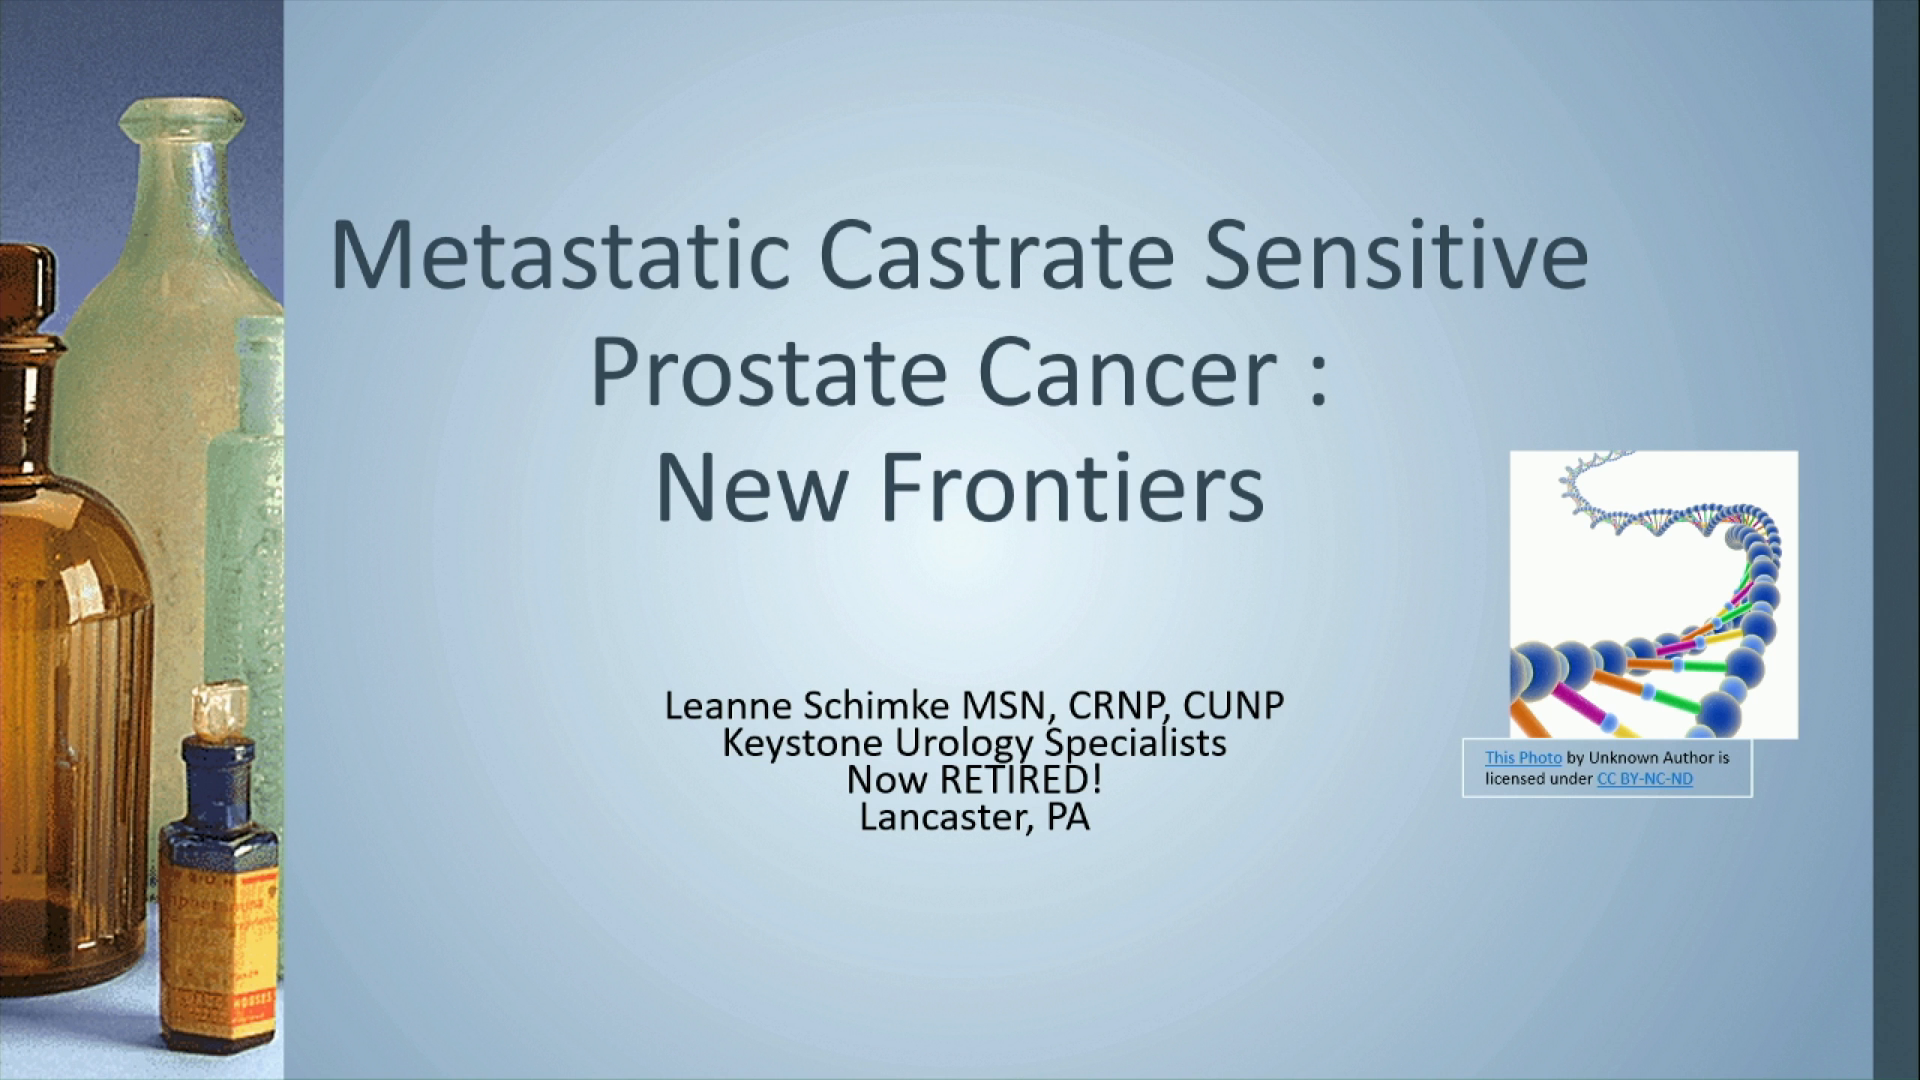 Lunch Symposium: Metastatic Hormone-Sensitive Prostate Cancer: New Treatment Options